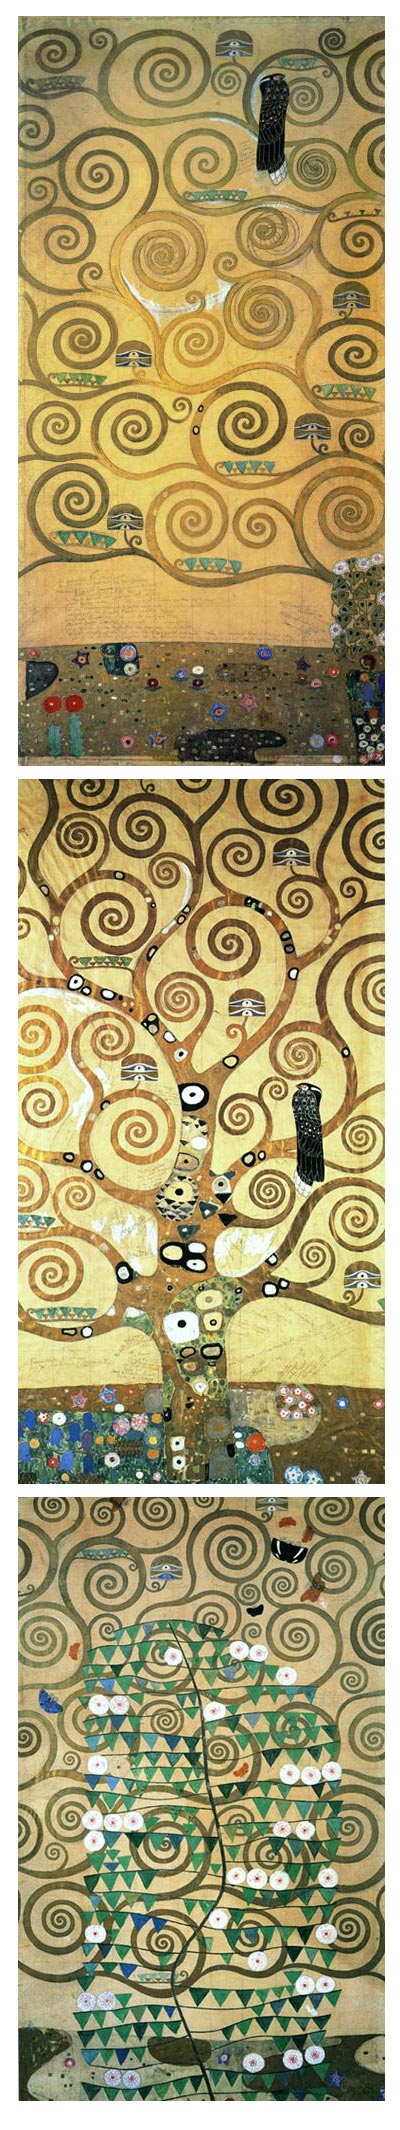   (Gustav Klimt).   (The Tree of Life)